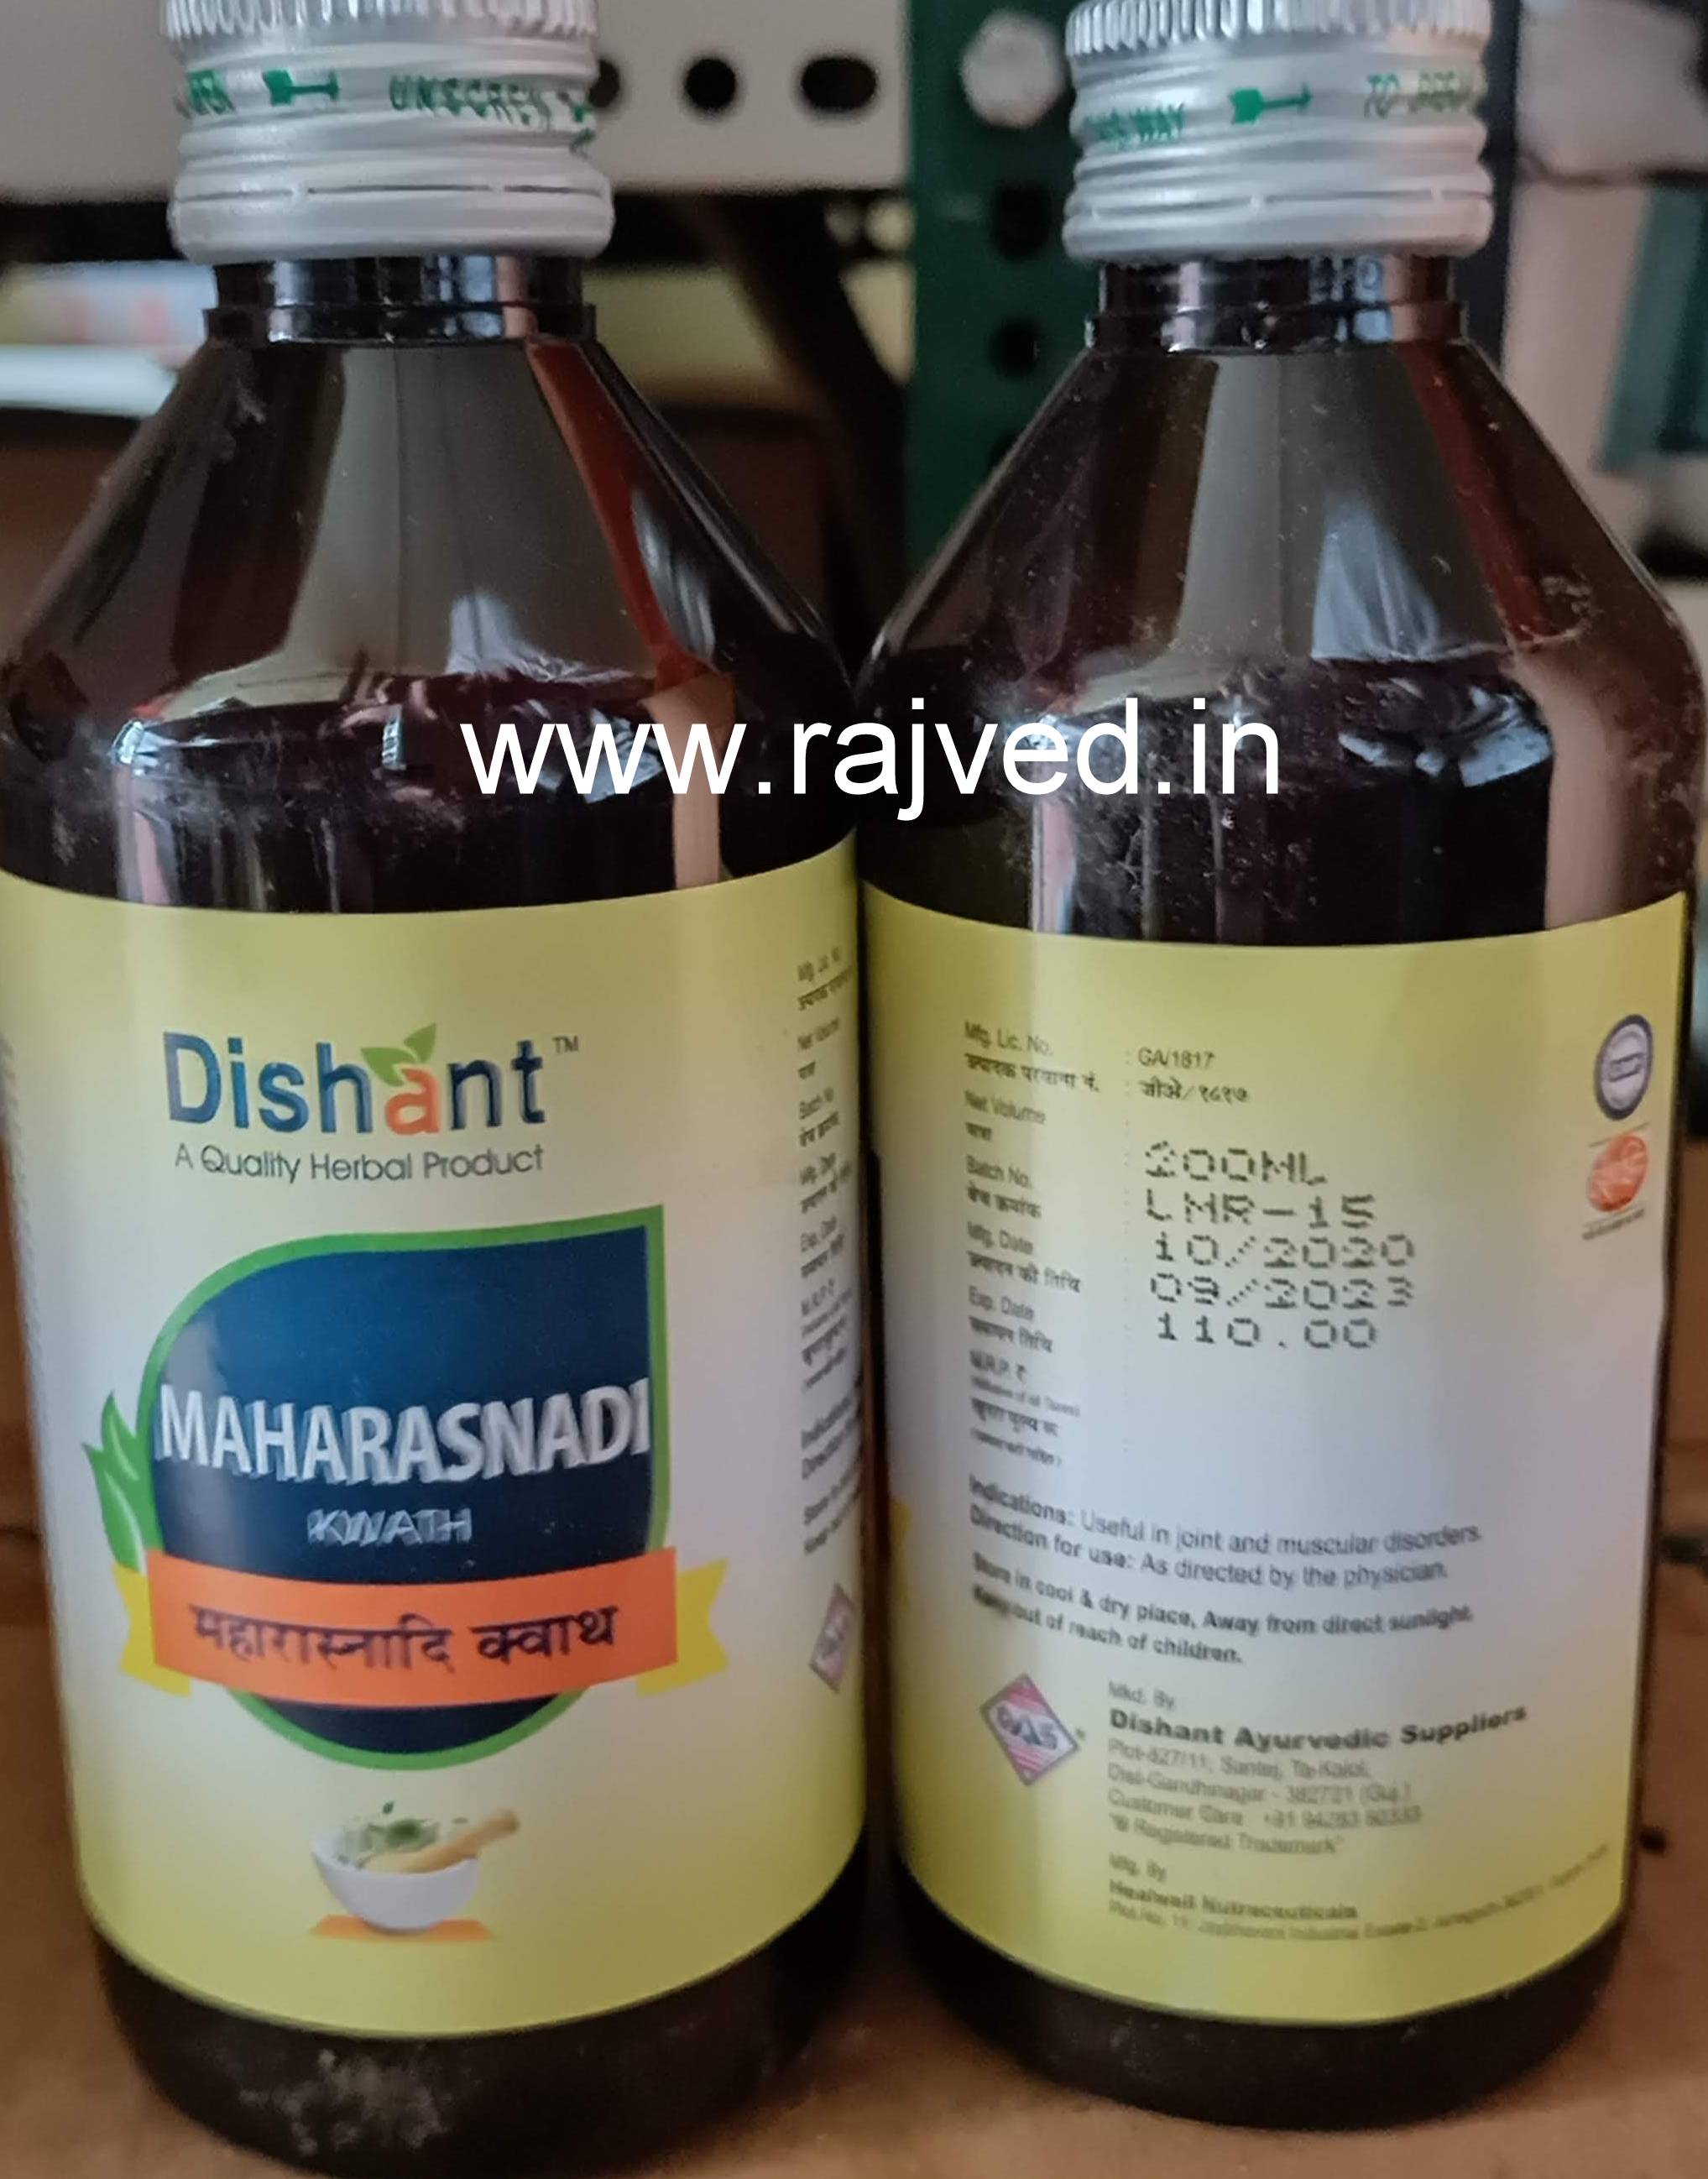 maharasnadi kwath 400ml dishant ayurvedic suppliers